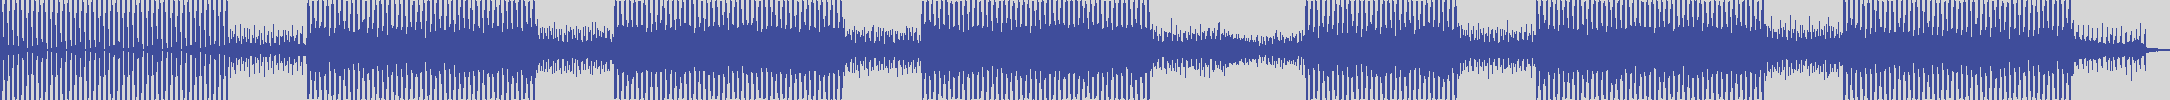 atomic_recordings [AR007] Kalibro - Morning Beats [Space Flowers Mix] audio wave form